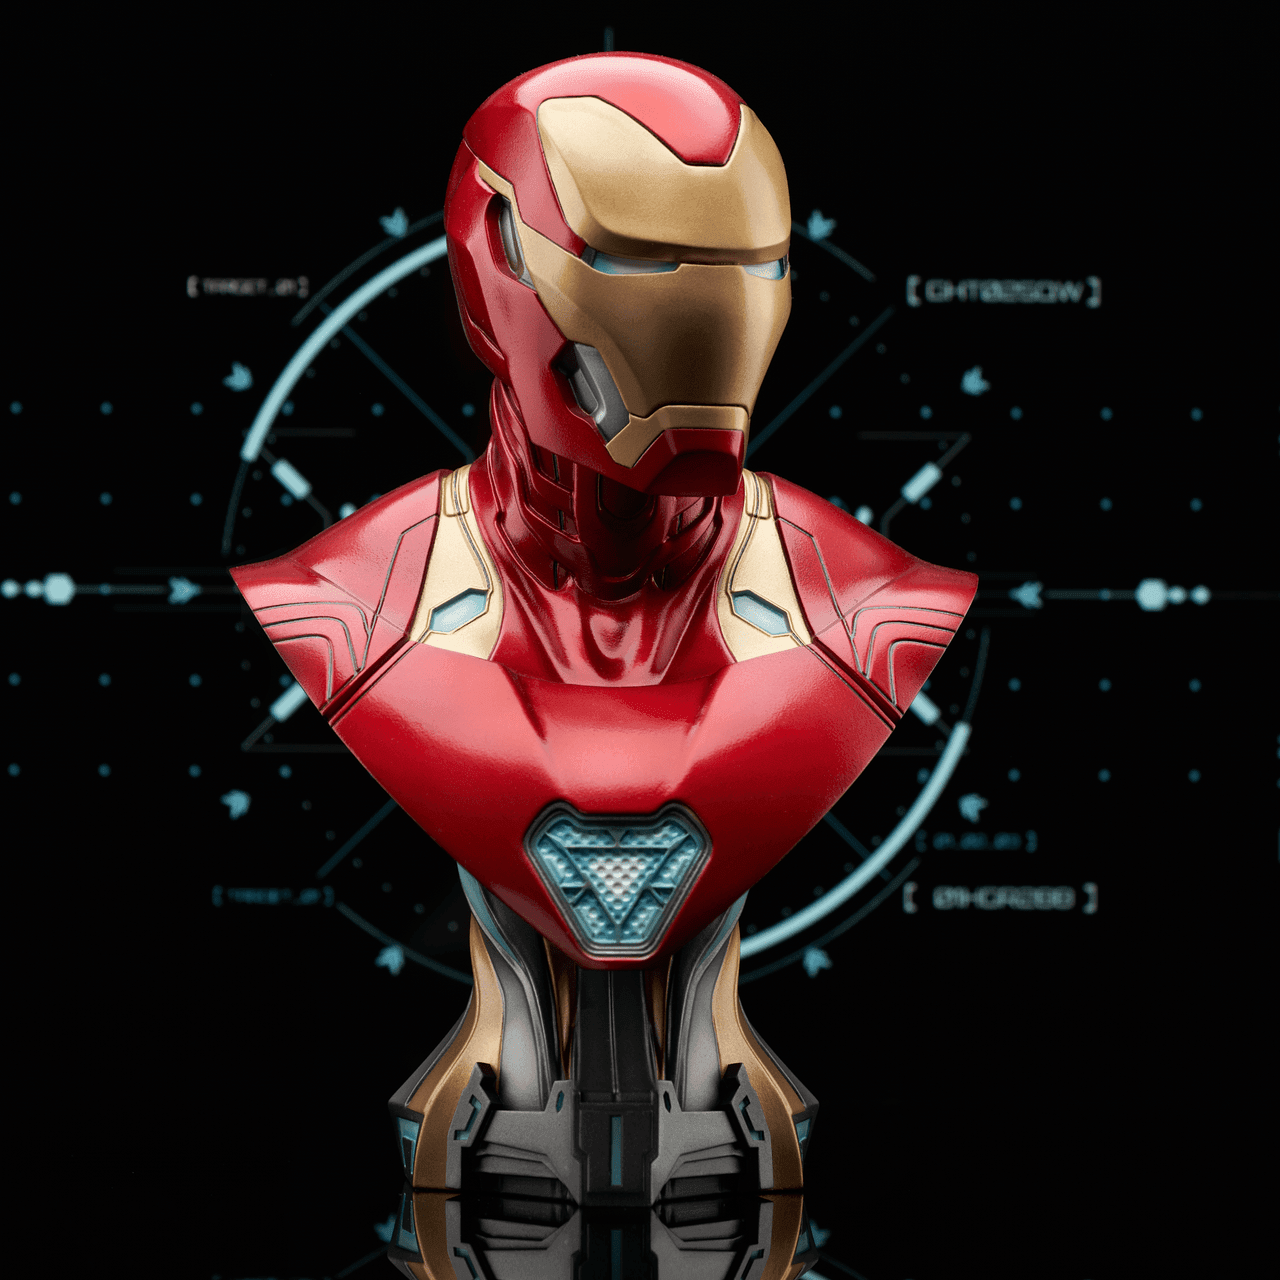 DSTAUG222404 Avengers 4: Endgame - Iron Man Mark L 1:2 Scale Bust - Diamond Select Toys - Titan Pop Culture